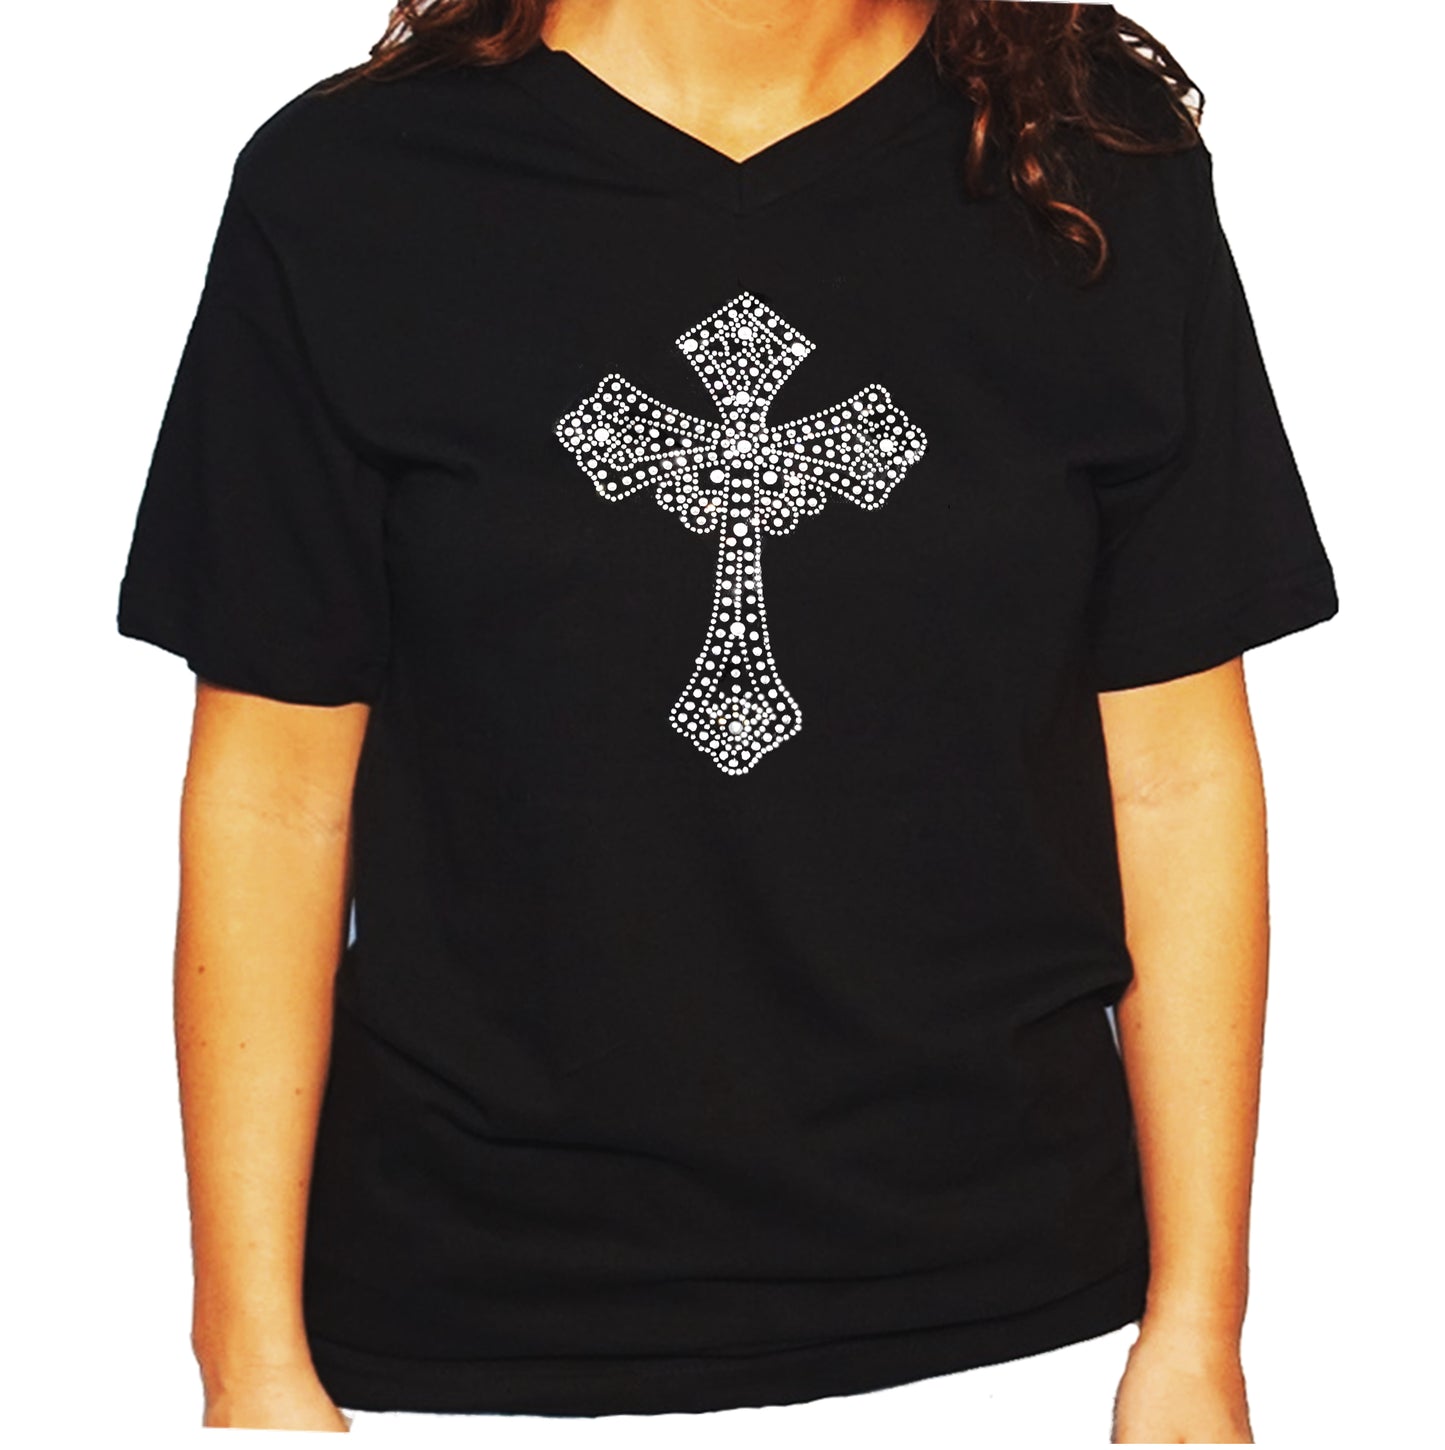 Women's / Unisex T-Shirt with Crystal Cross in Rhinestones